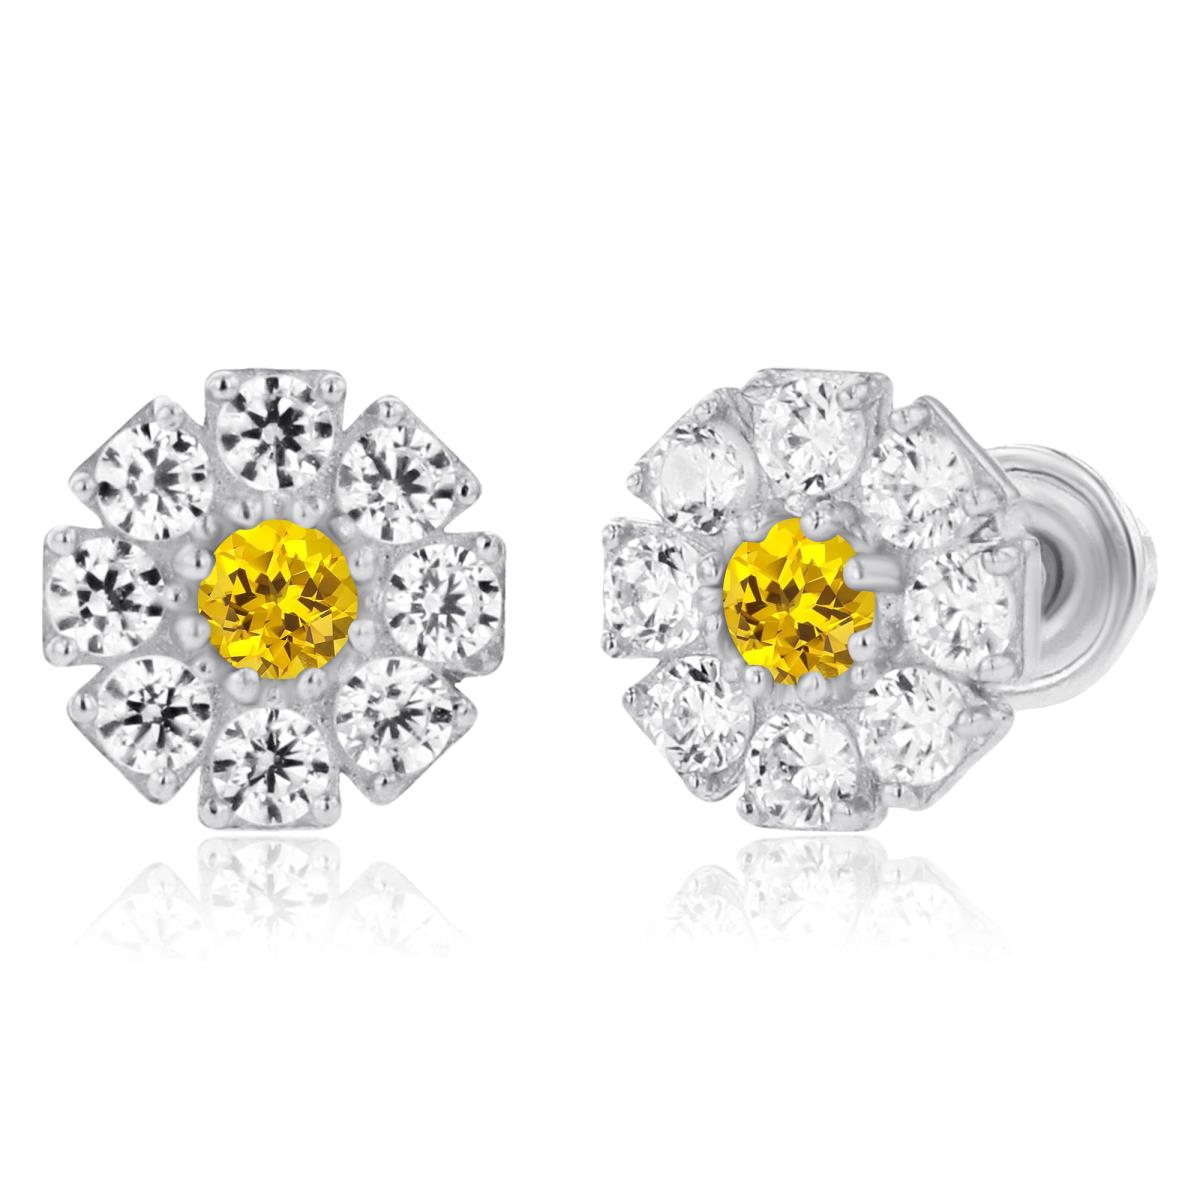 14K White Gold 2mm Round Created Yellow Sapphire & 1.5mm Created White Sapphire Flower Screwback Earrings